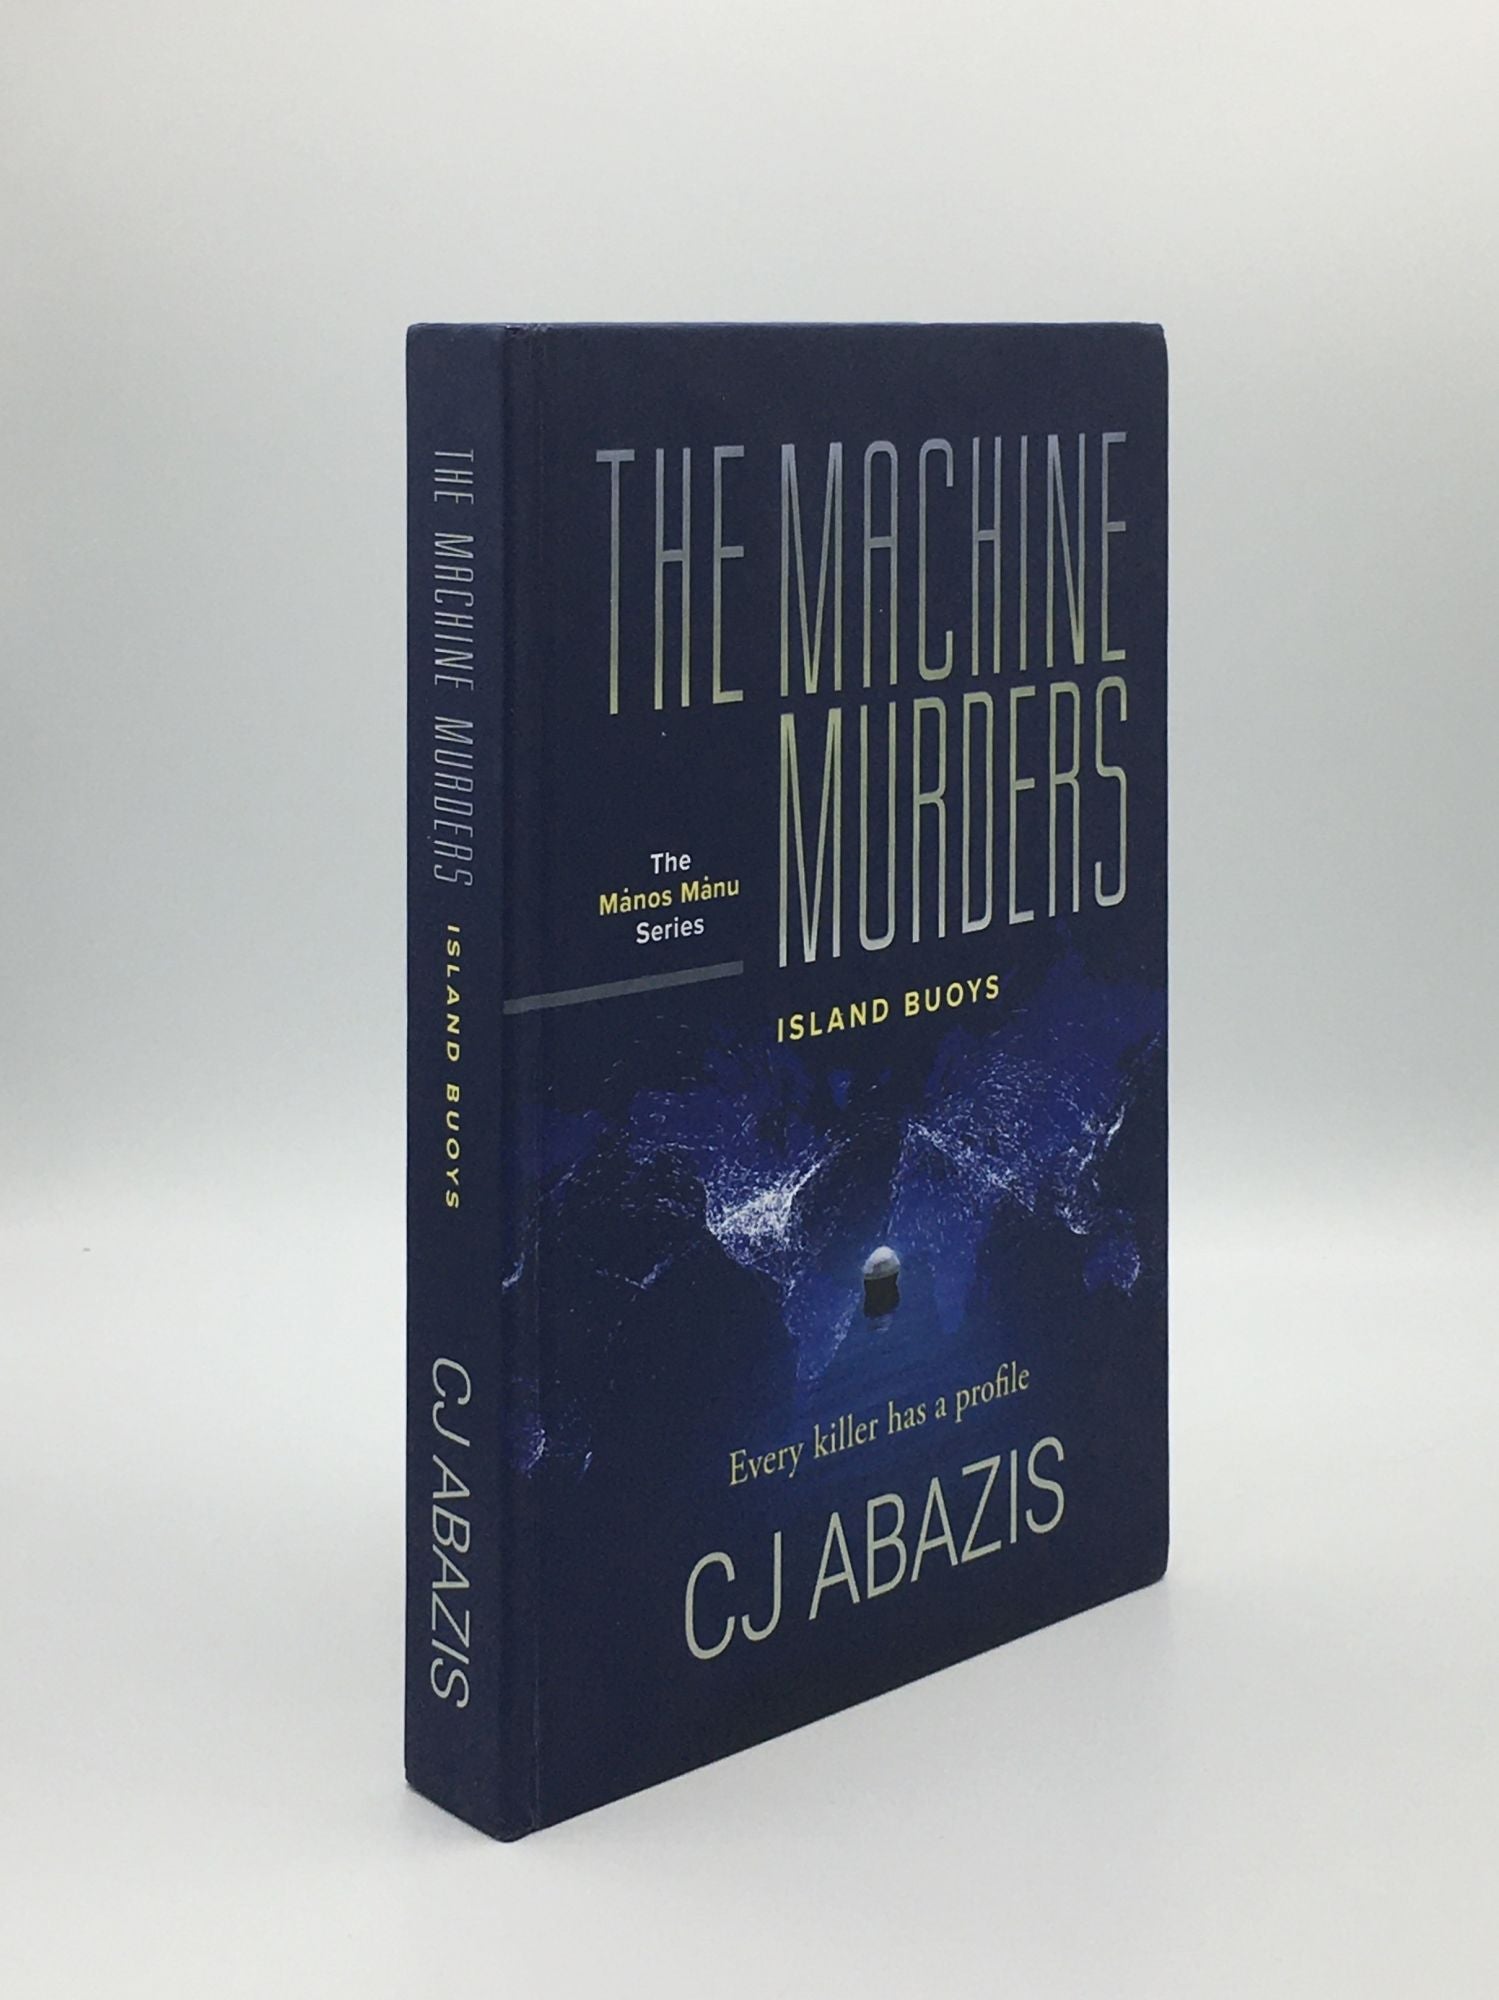 ABAZIS C.J. - The Machine Murders the Island Buoys